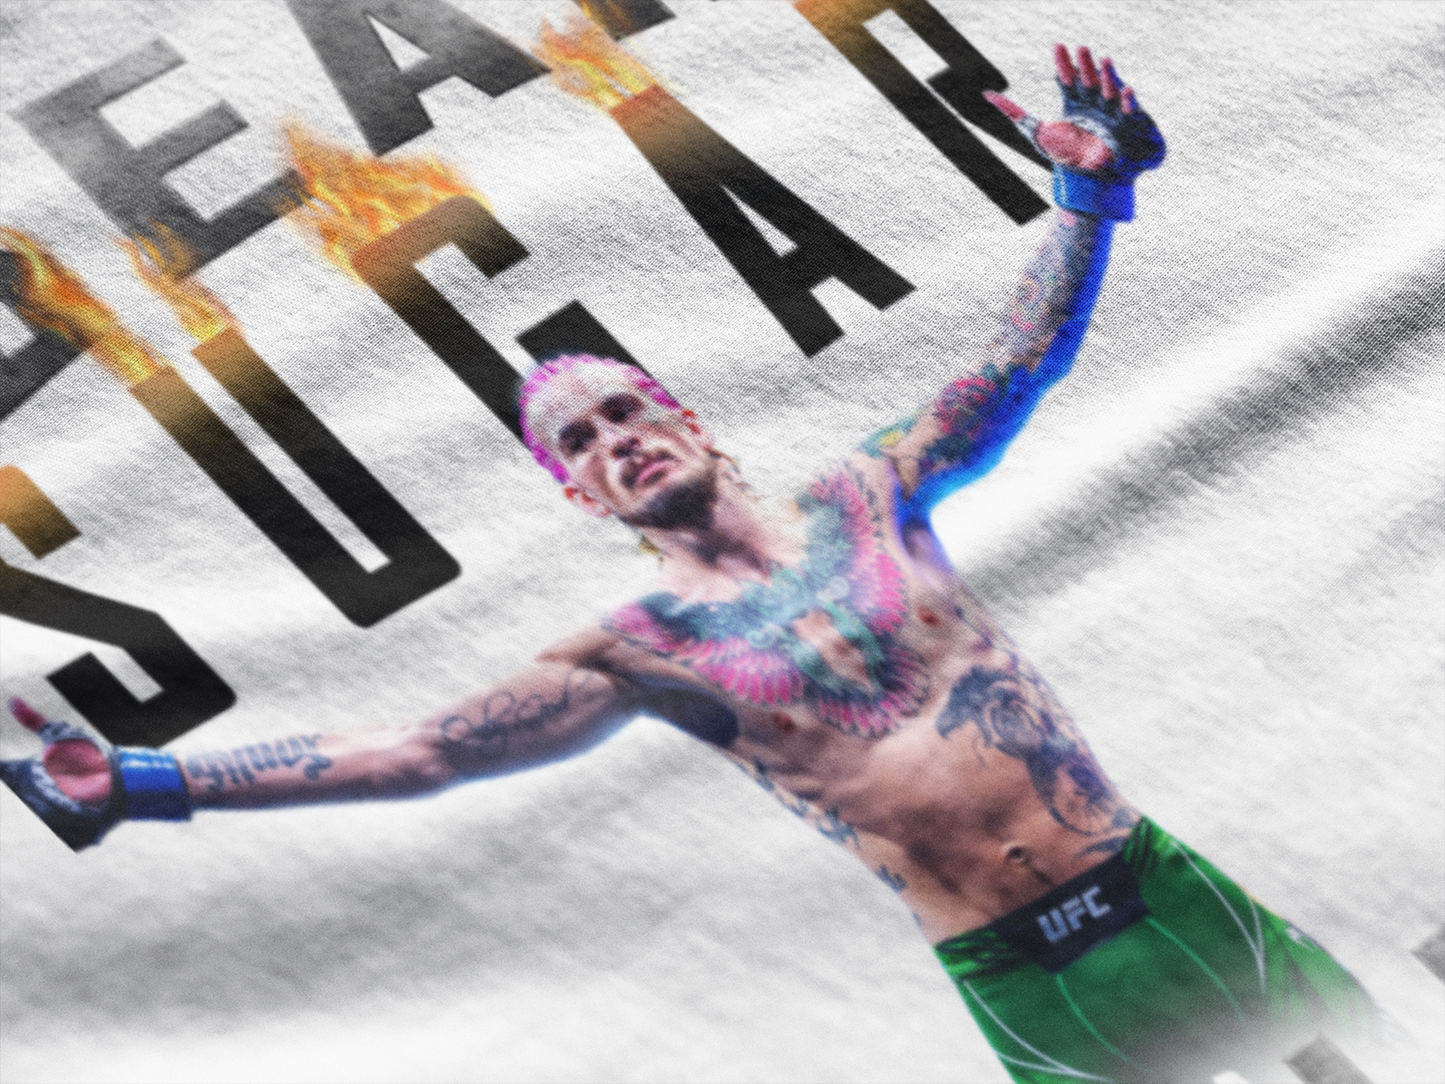 Sean "Sugar" O'Malley UFC Fighter Graphic Tee